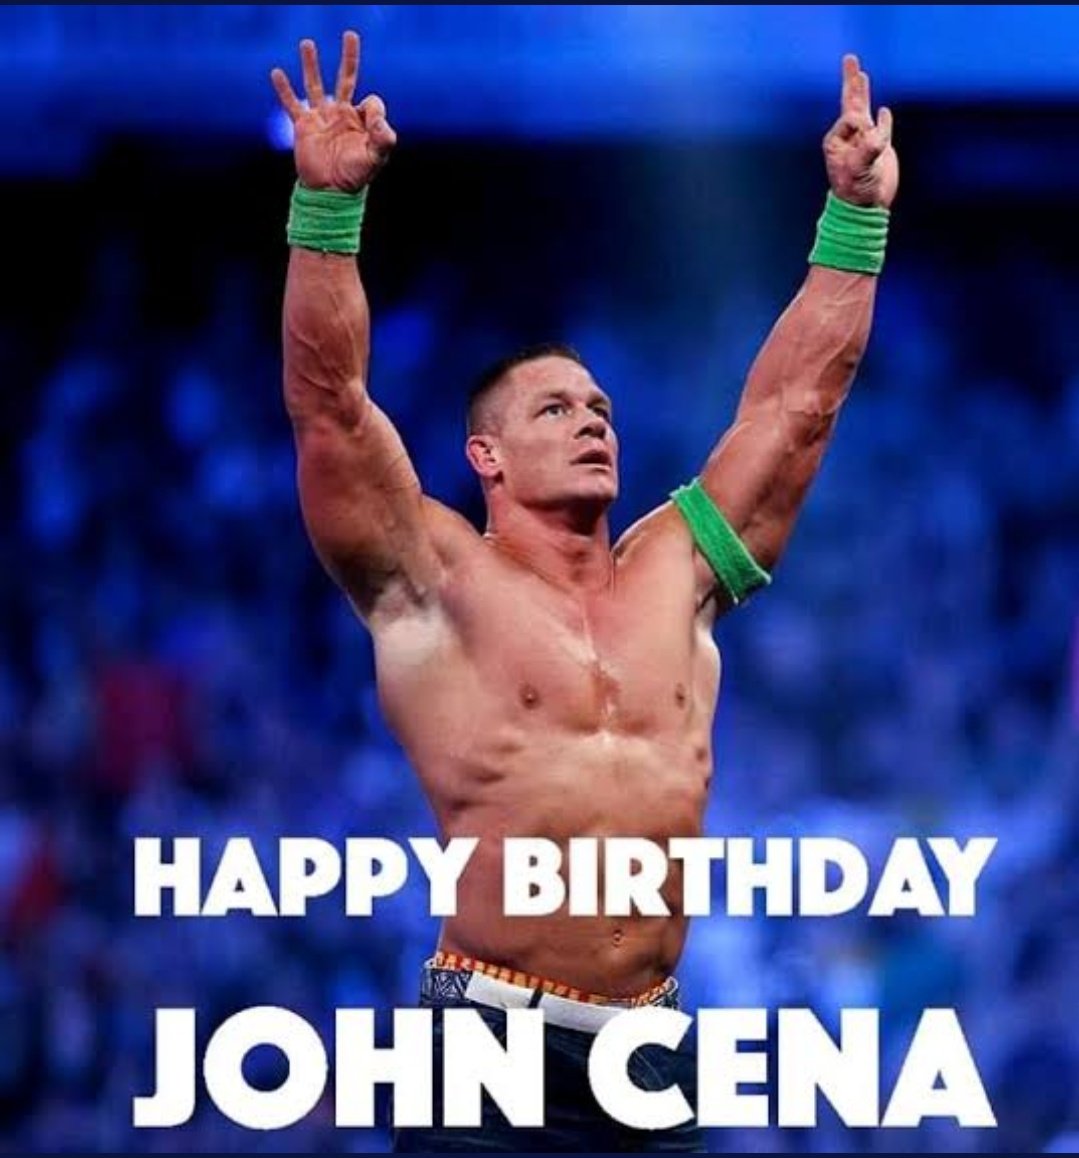  Birthday day John Cena 